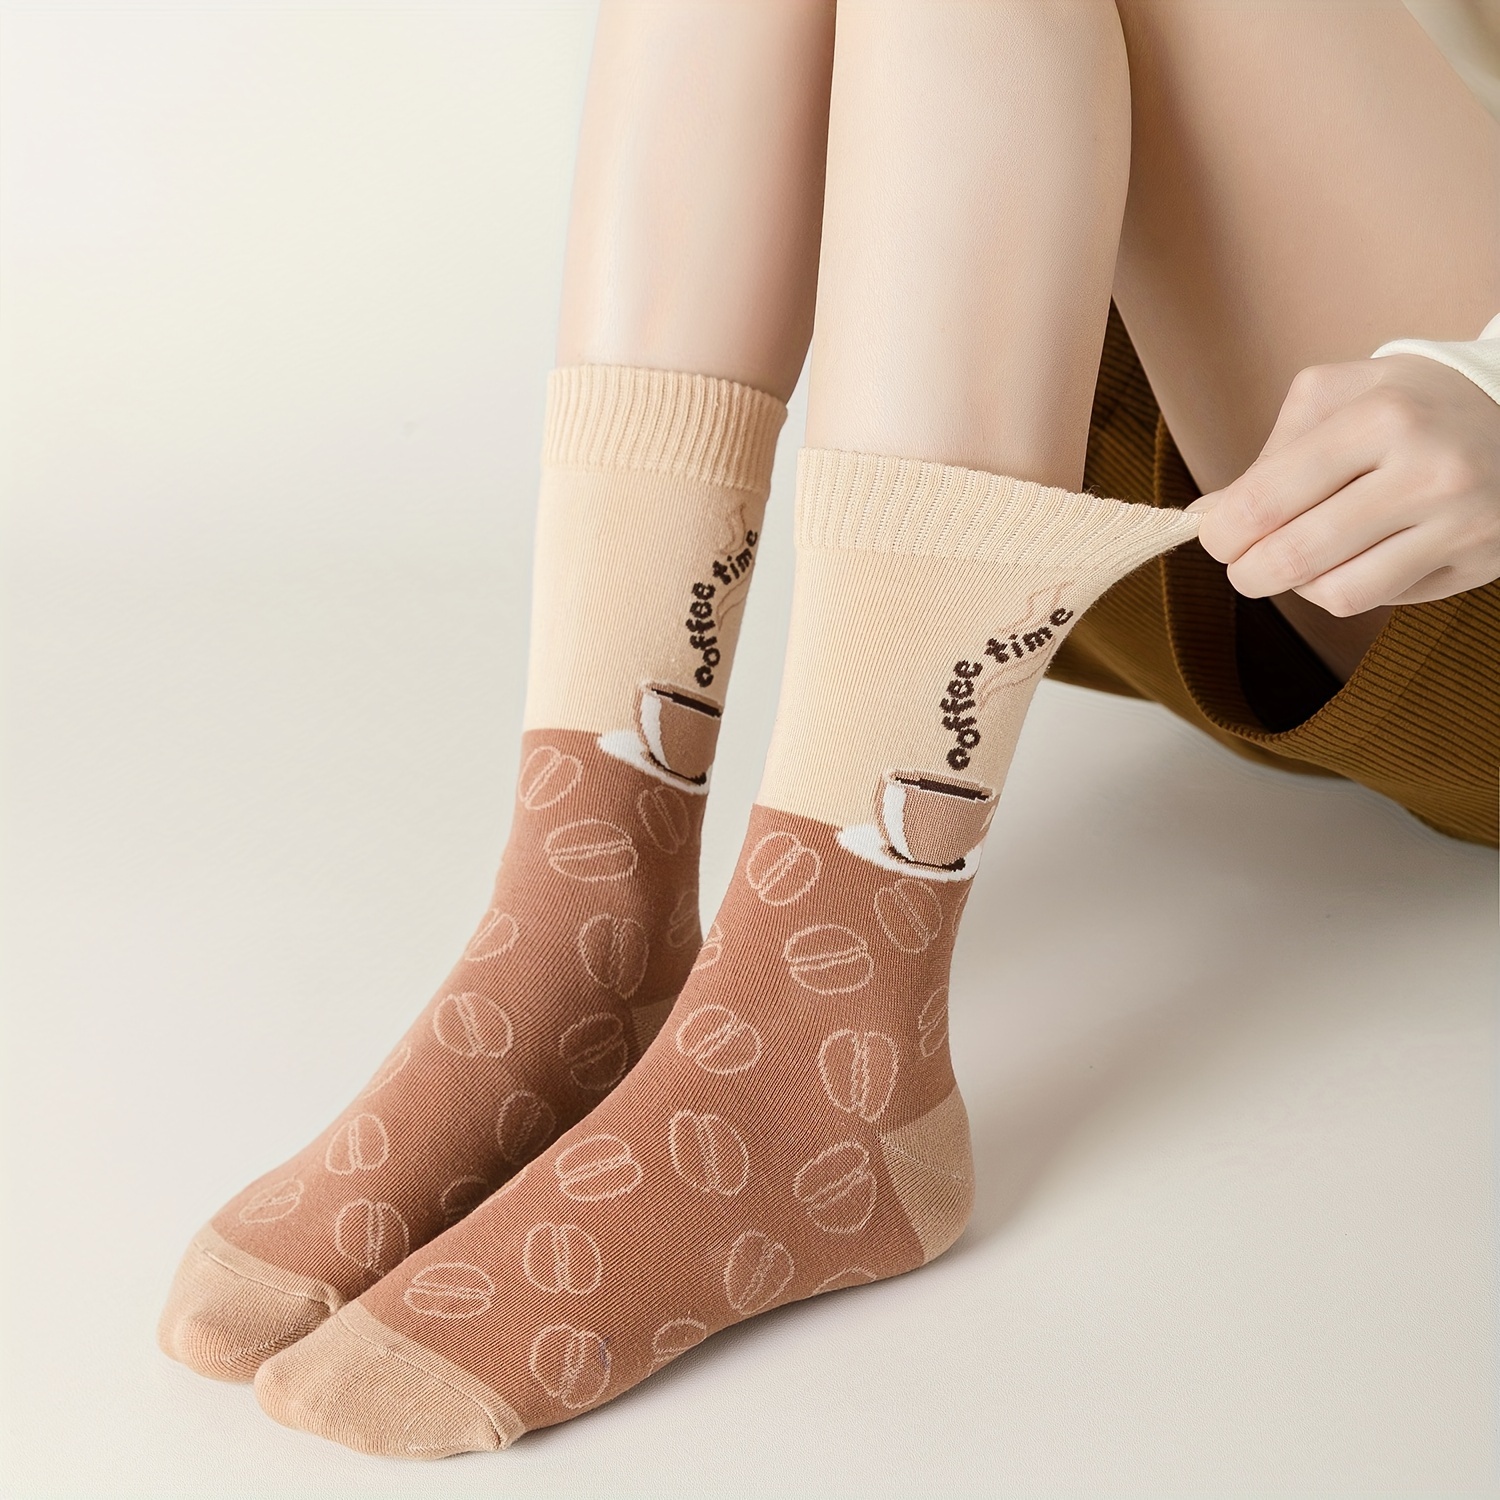 5 pairs coffee print socks comfy breathable mid tube socks womens stockings hosiery details 15